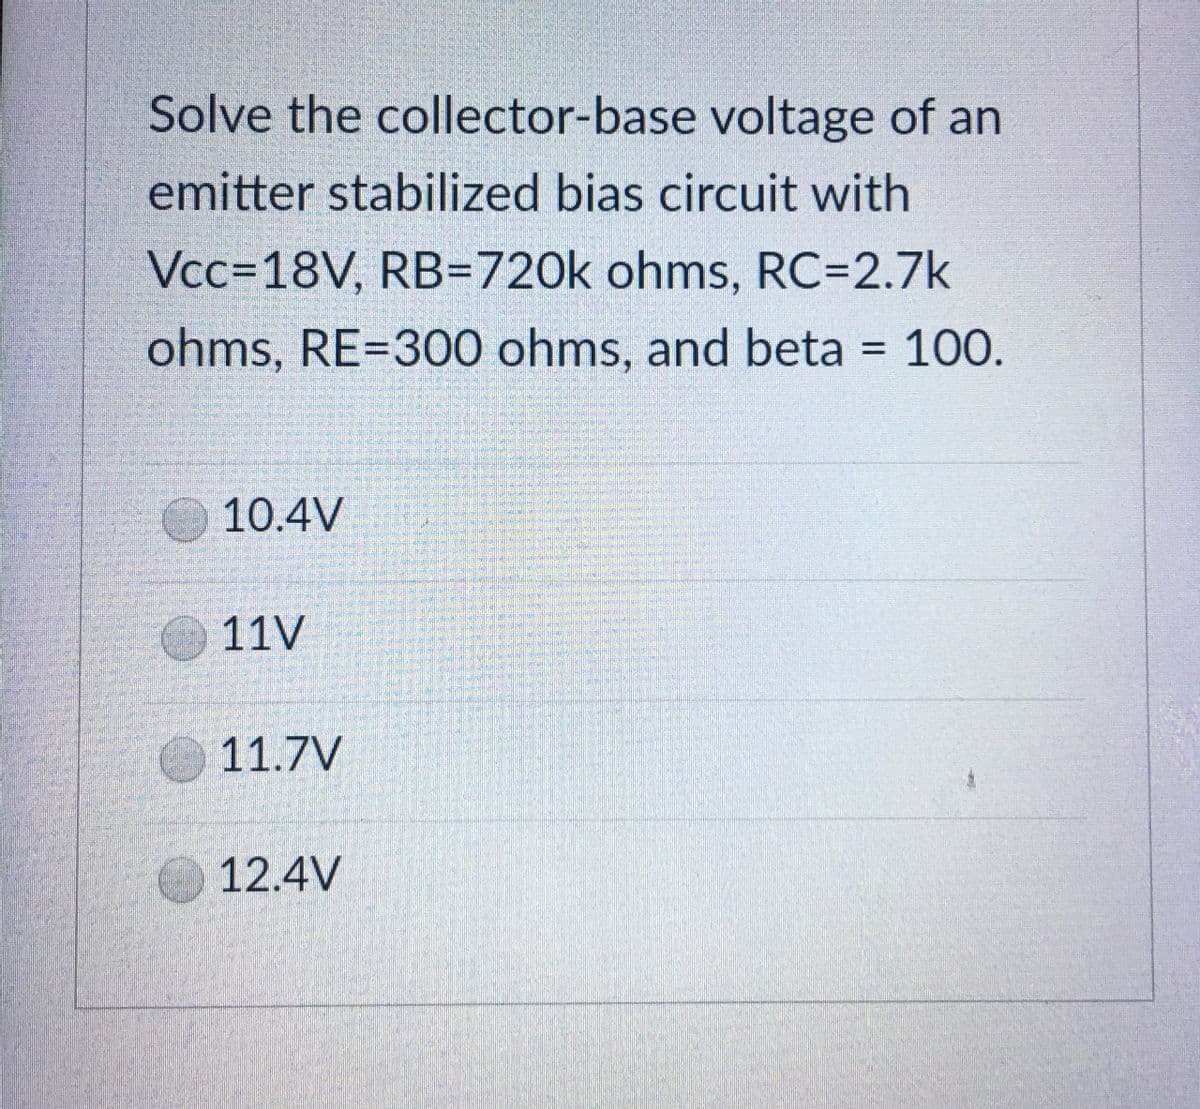 Solve the collector-base voltage of an
emitter stabilized bias circuit with
Vcc=18V, RB-720k ohms, RC=2.7k
ohms, RE=300 ohms, and beta 100.
10.4V
11V
11.7V
12.4V